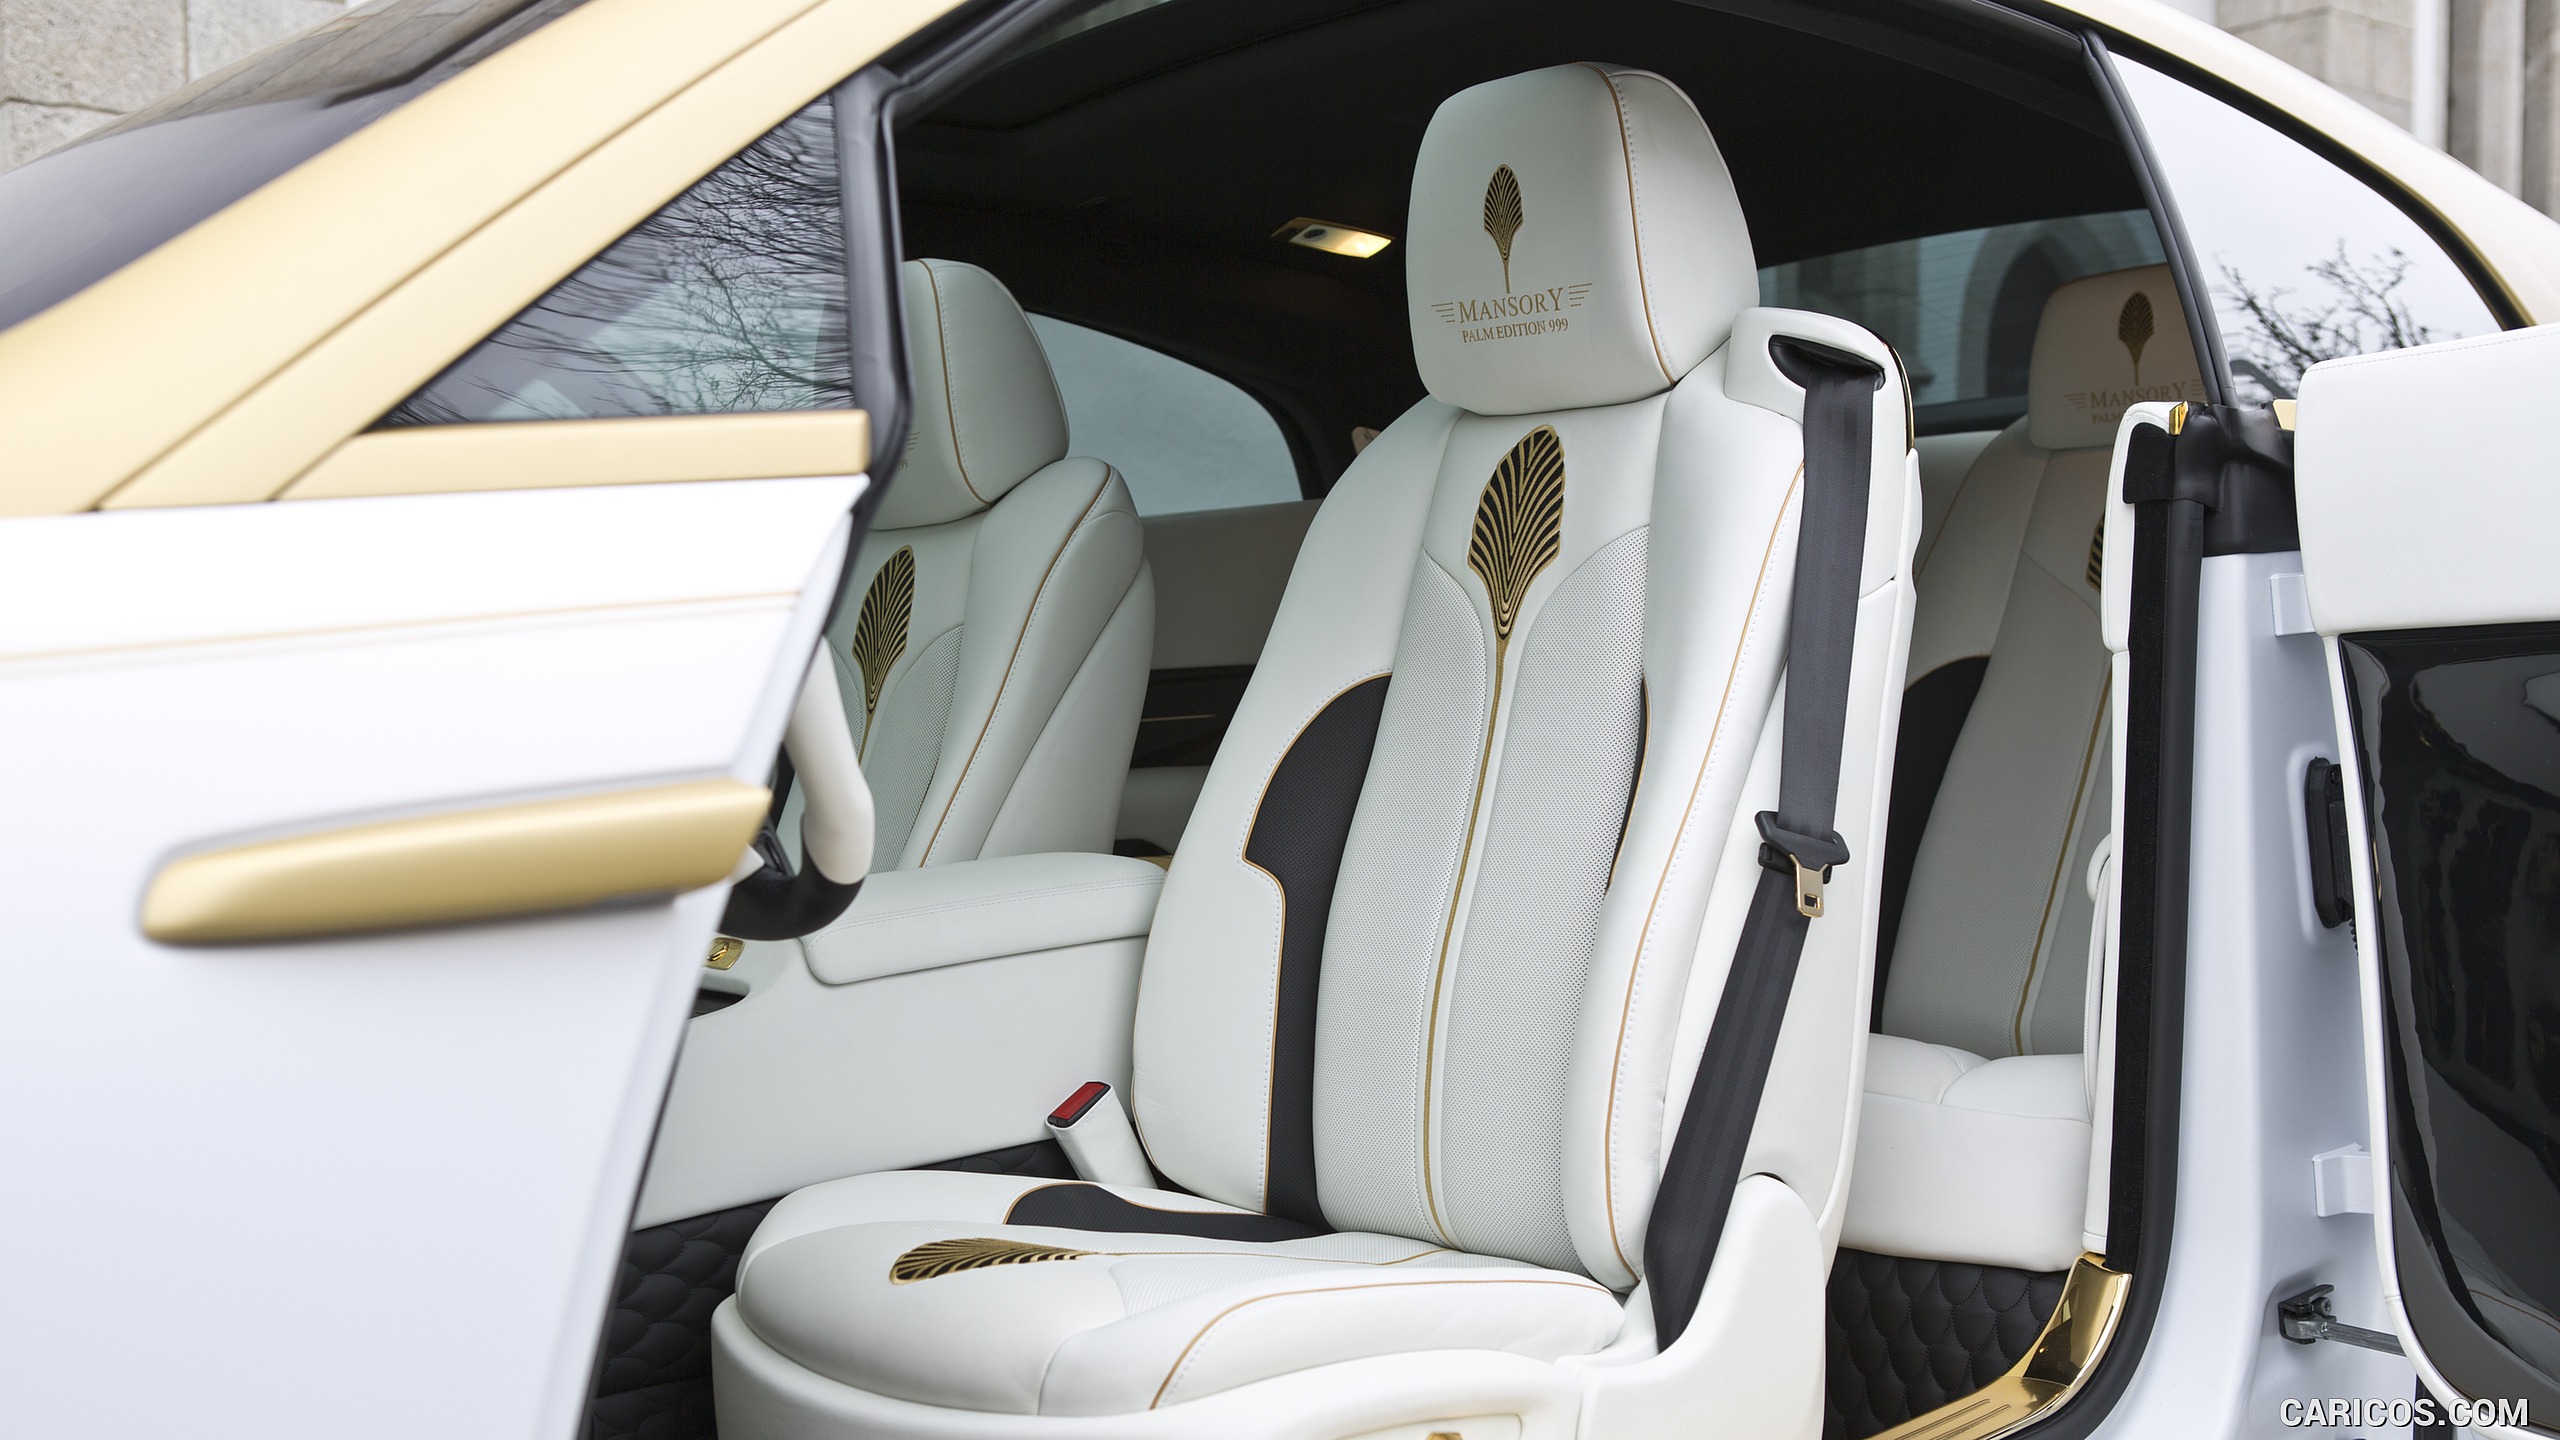 2016 MANSORY Rolls-Royce Wraith Palm Edition 999 - Interior, #8 of 10